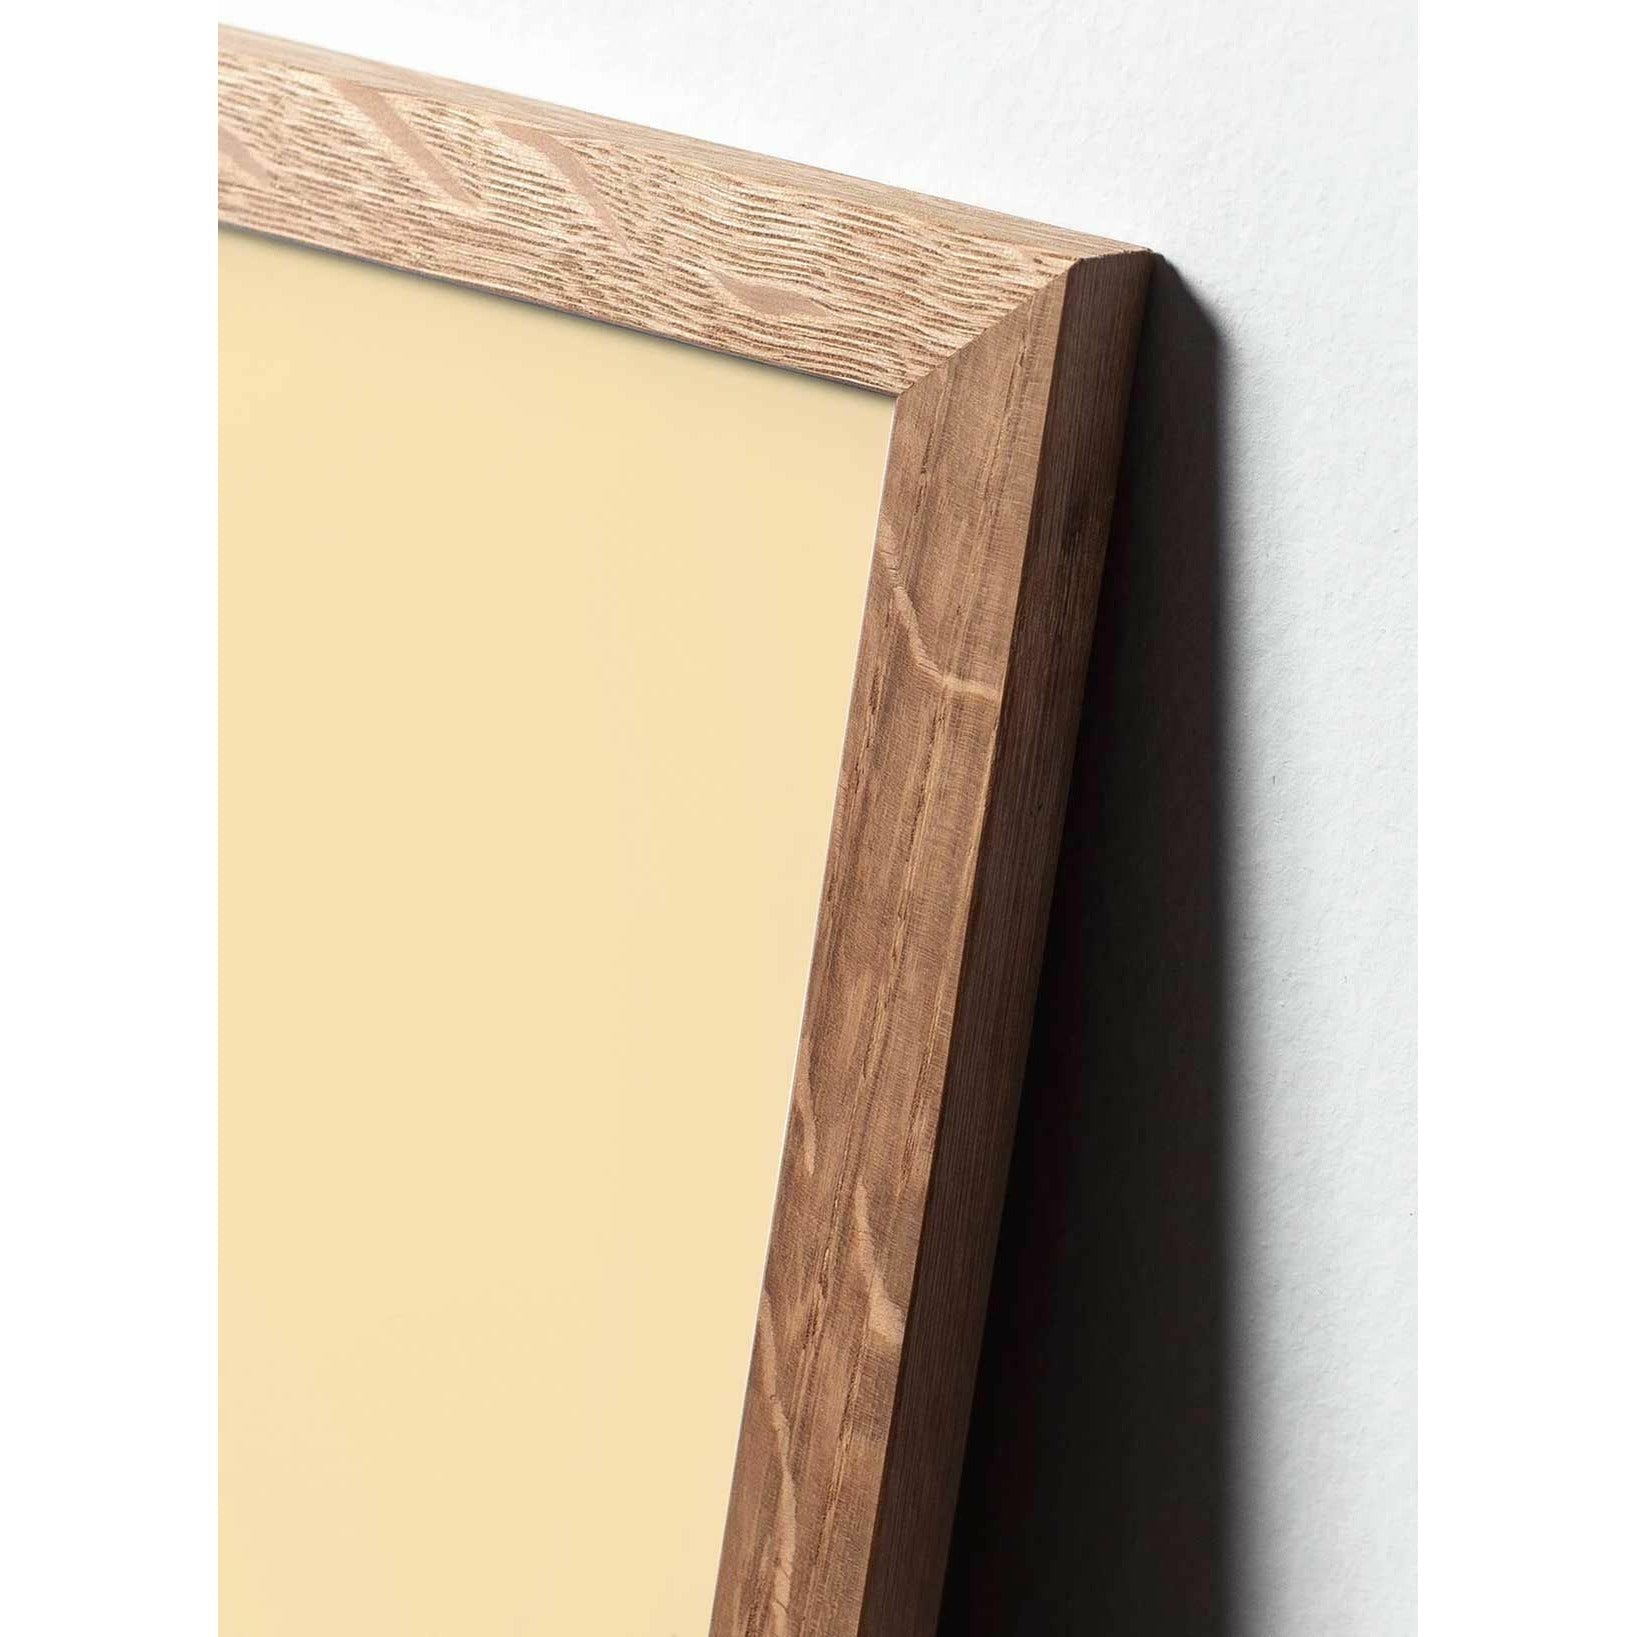 Póster de línea de caída de creación, marco hecho de madera clara de 70x100 cm, fondo blanco